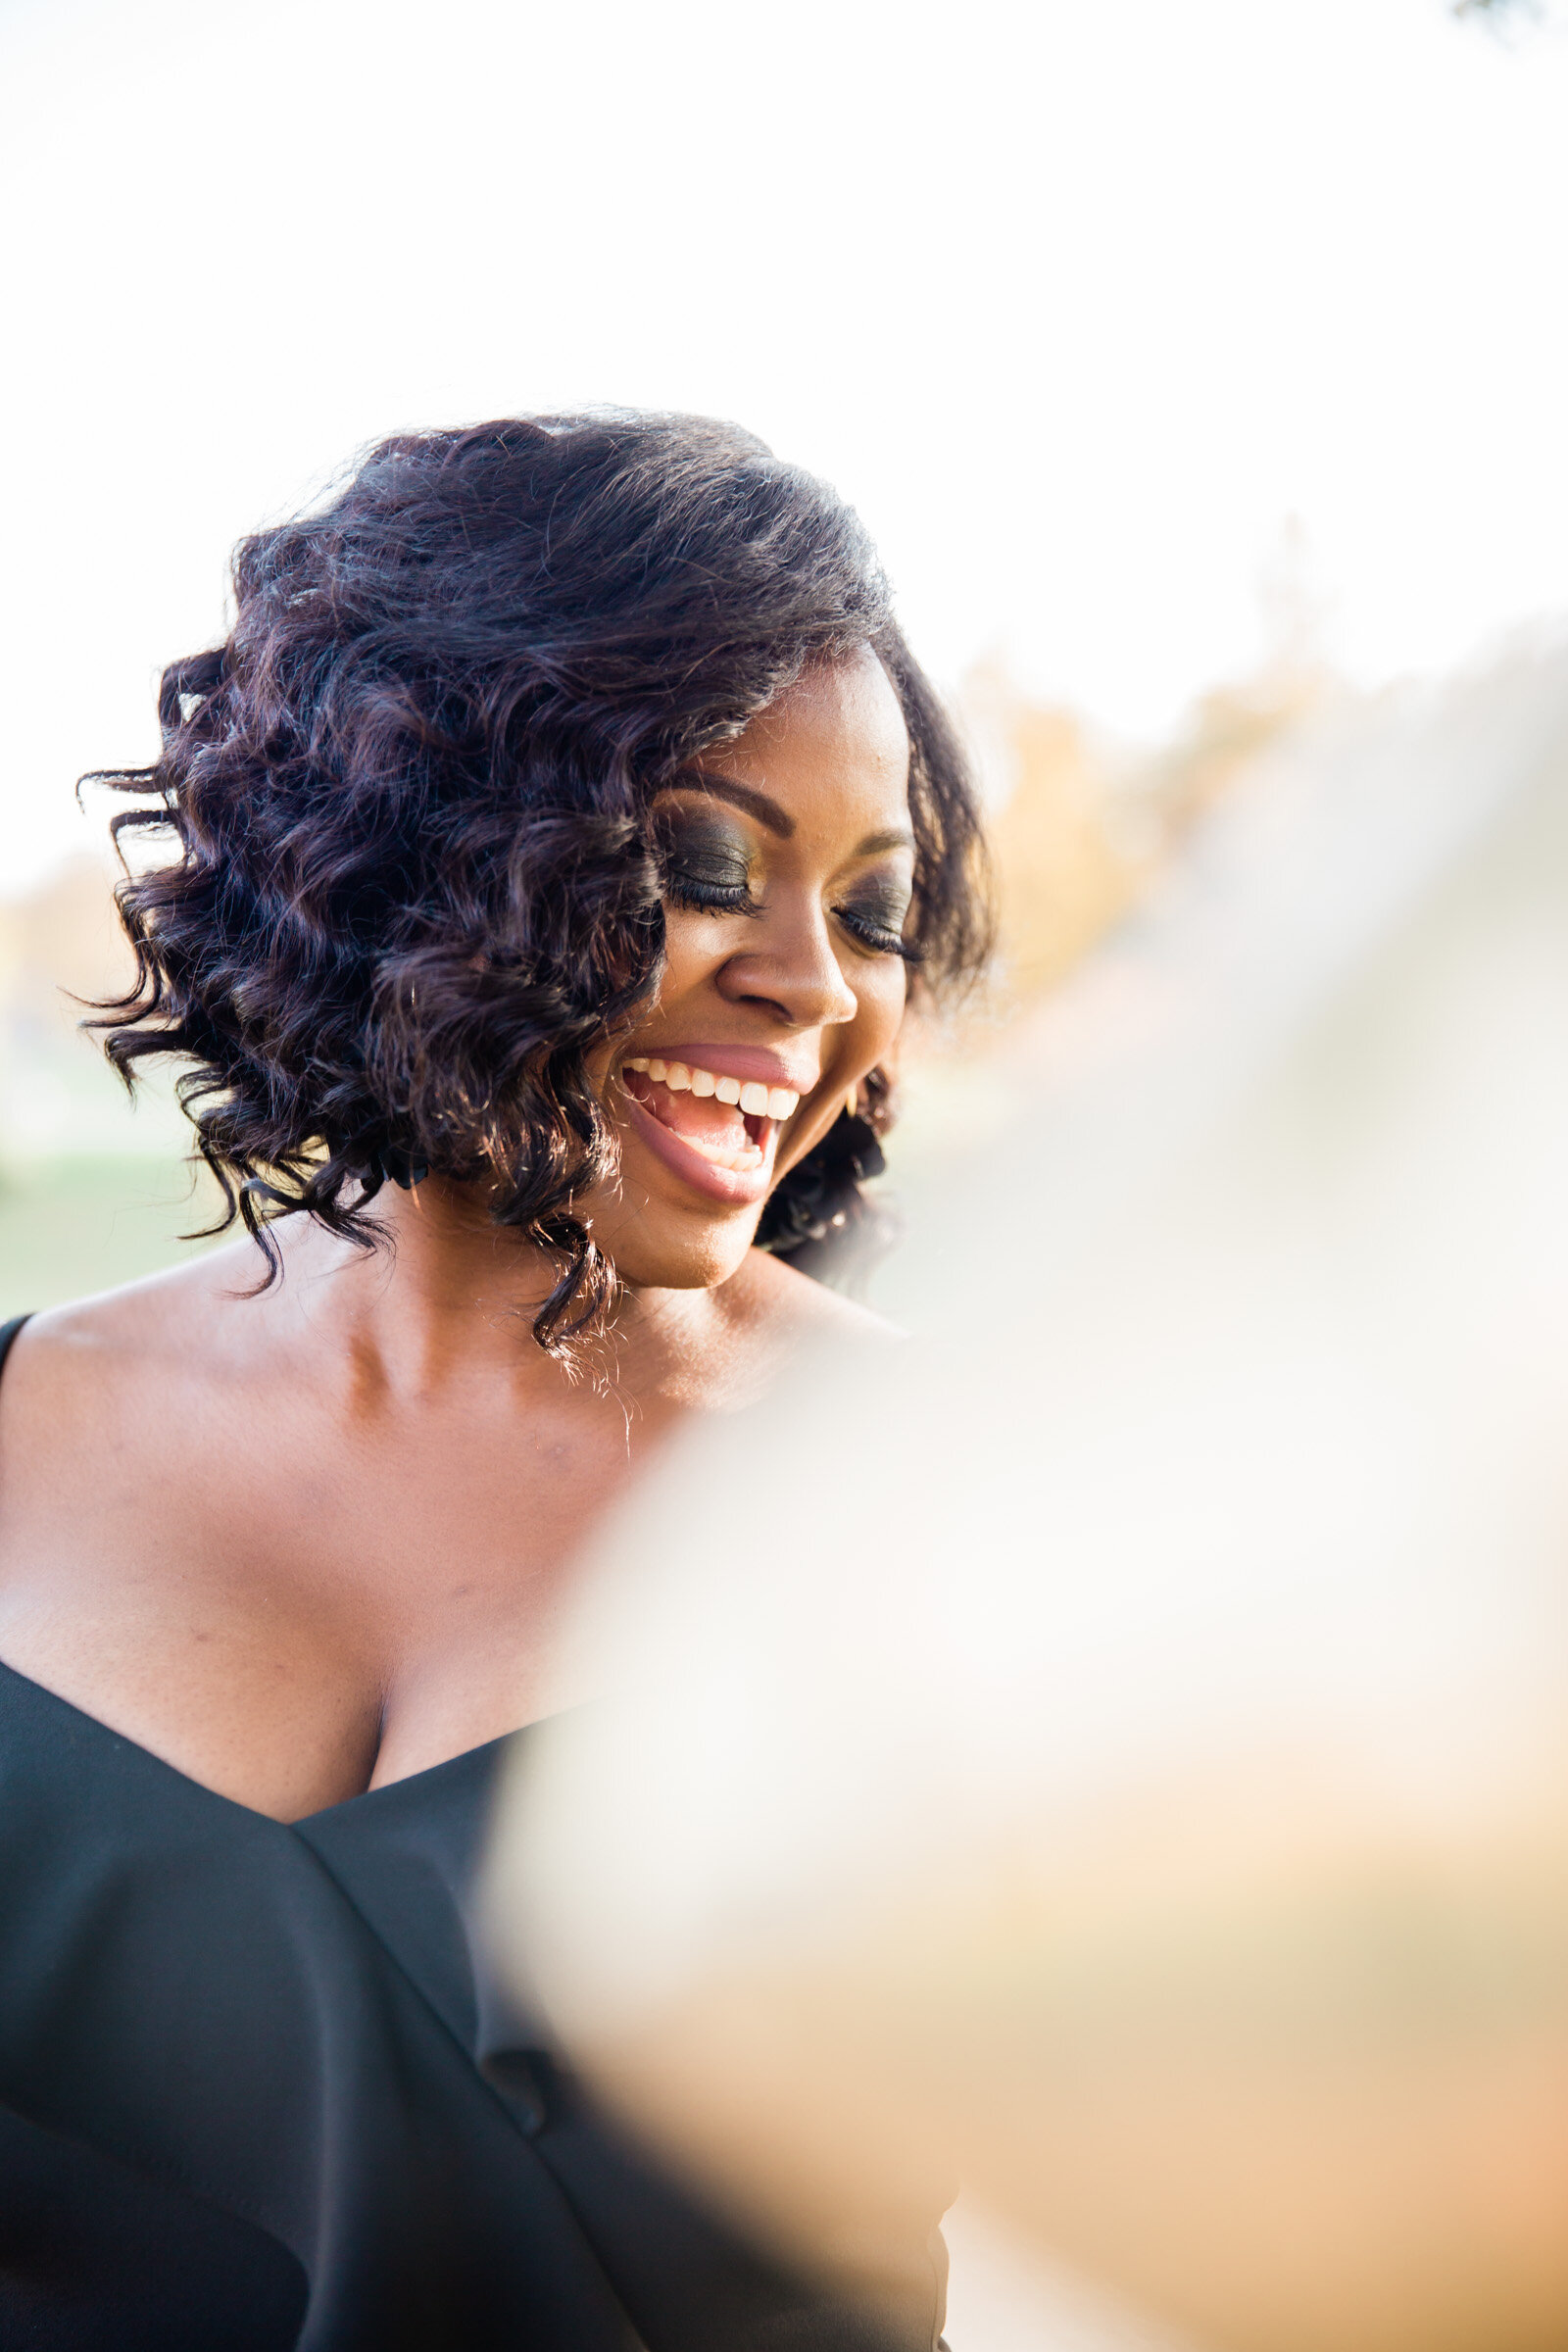 Black Female Portrait Photographer in Baltimore 40t Birthday Photoshoot by Megapixels Media Photography-7.jpg